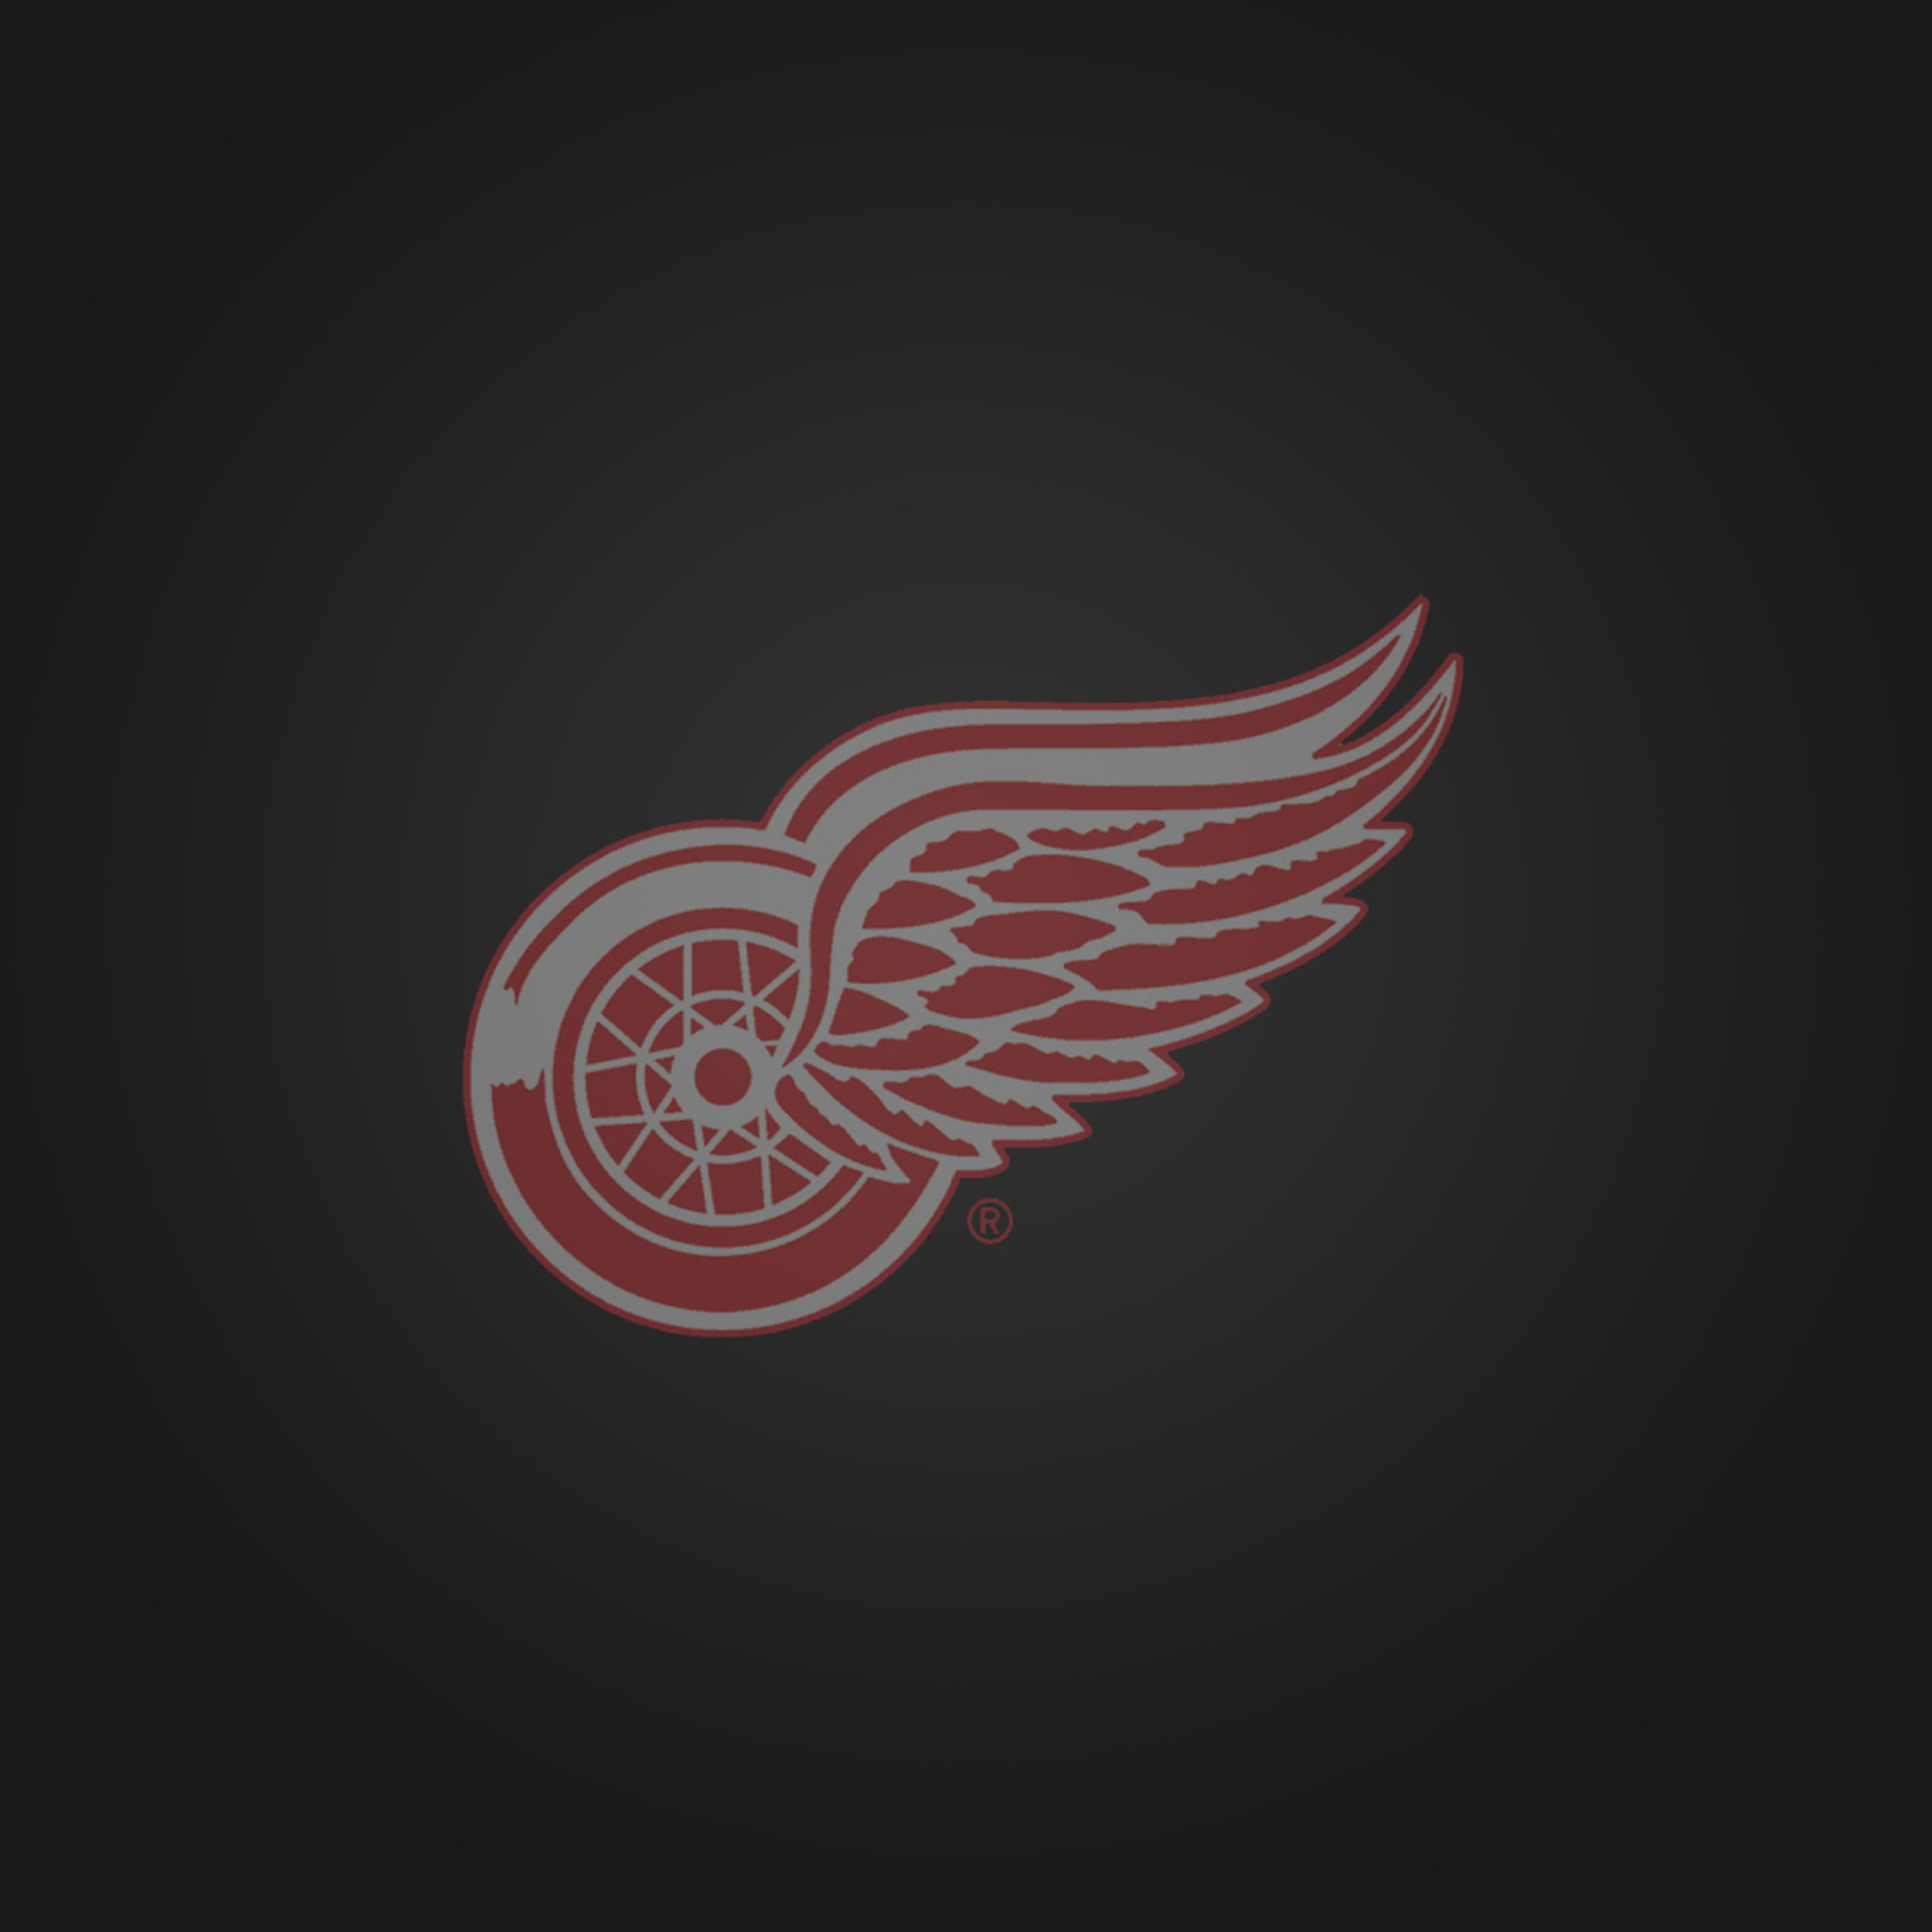 Detroit Red Wings wallpaper 2048x2048